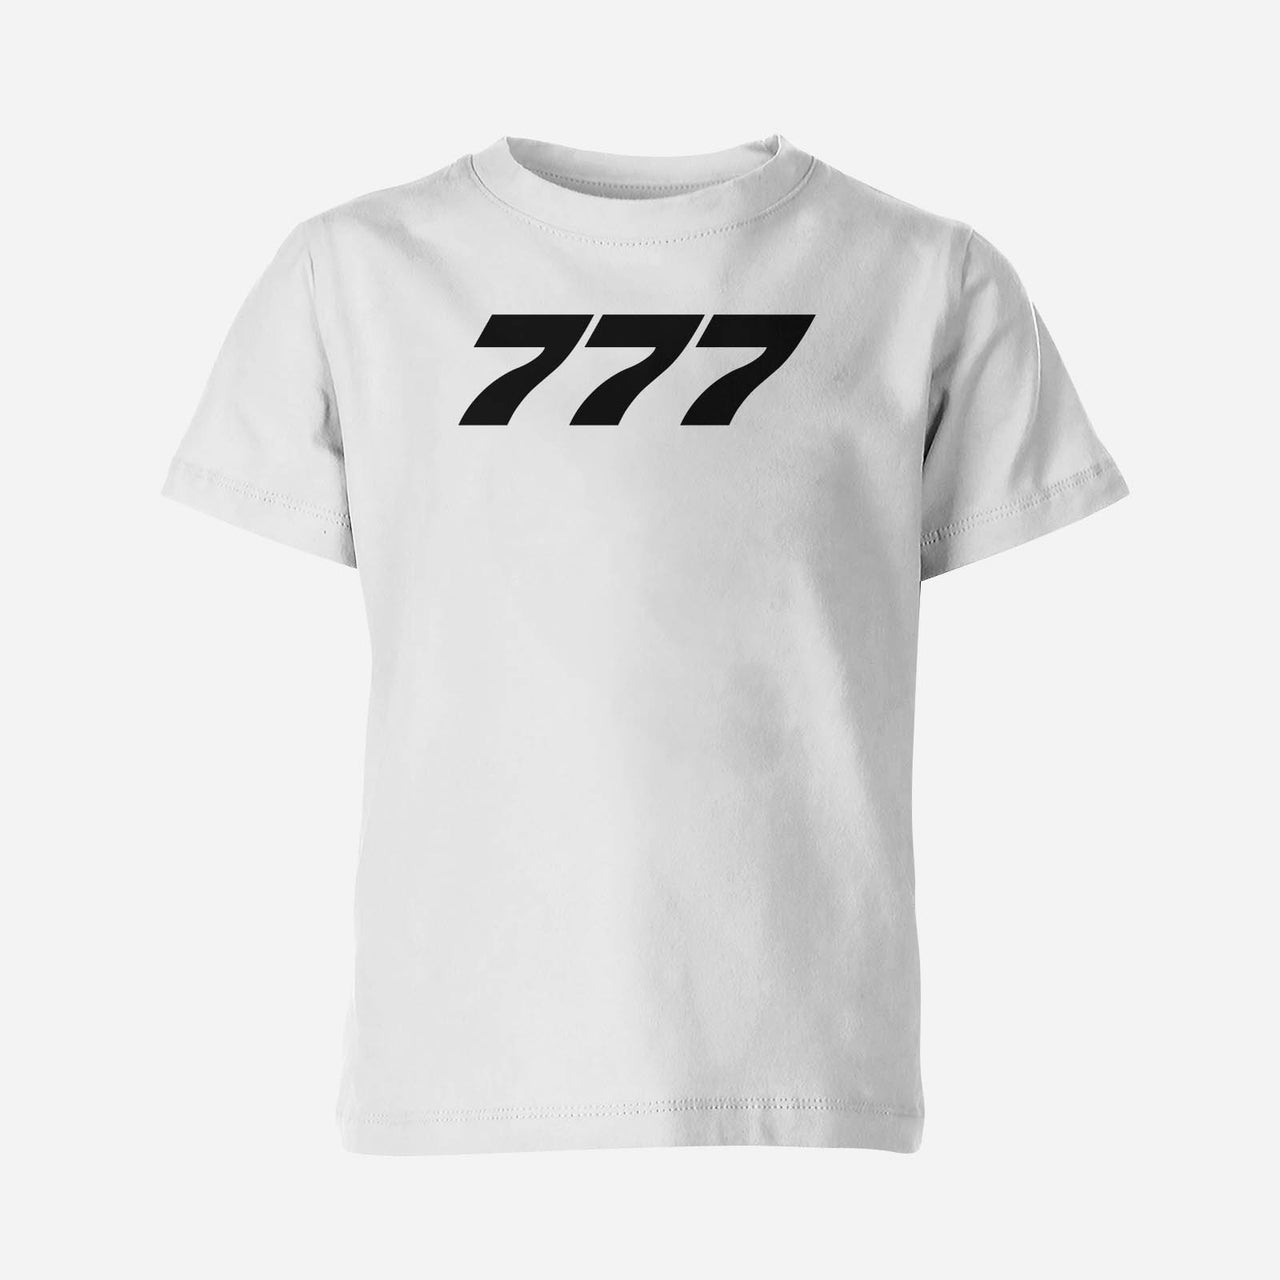 777 Flat Text Designed Children T-Shirts